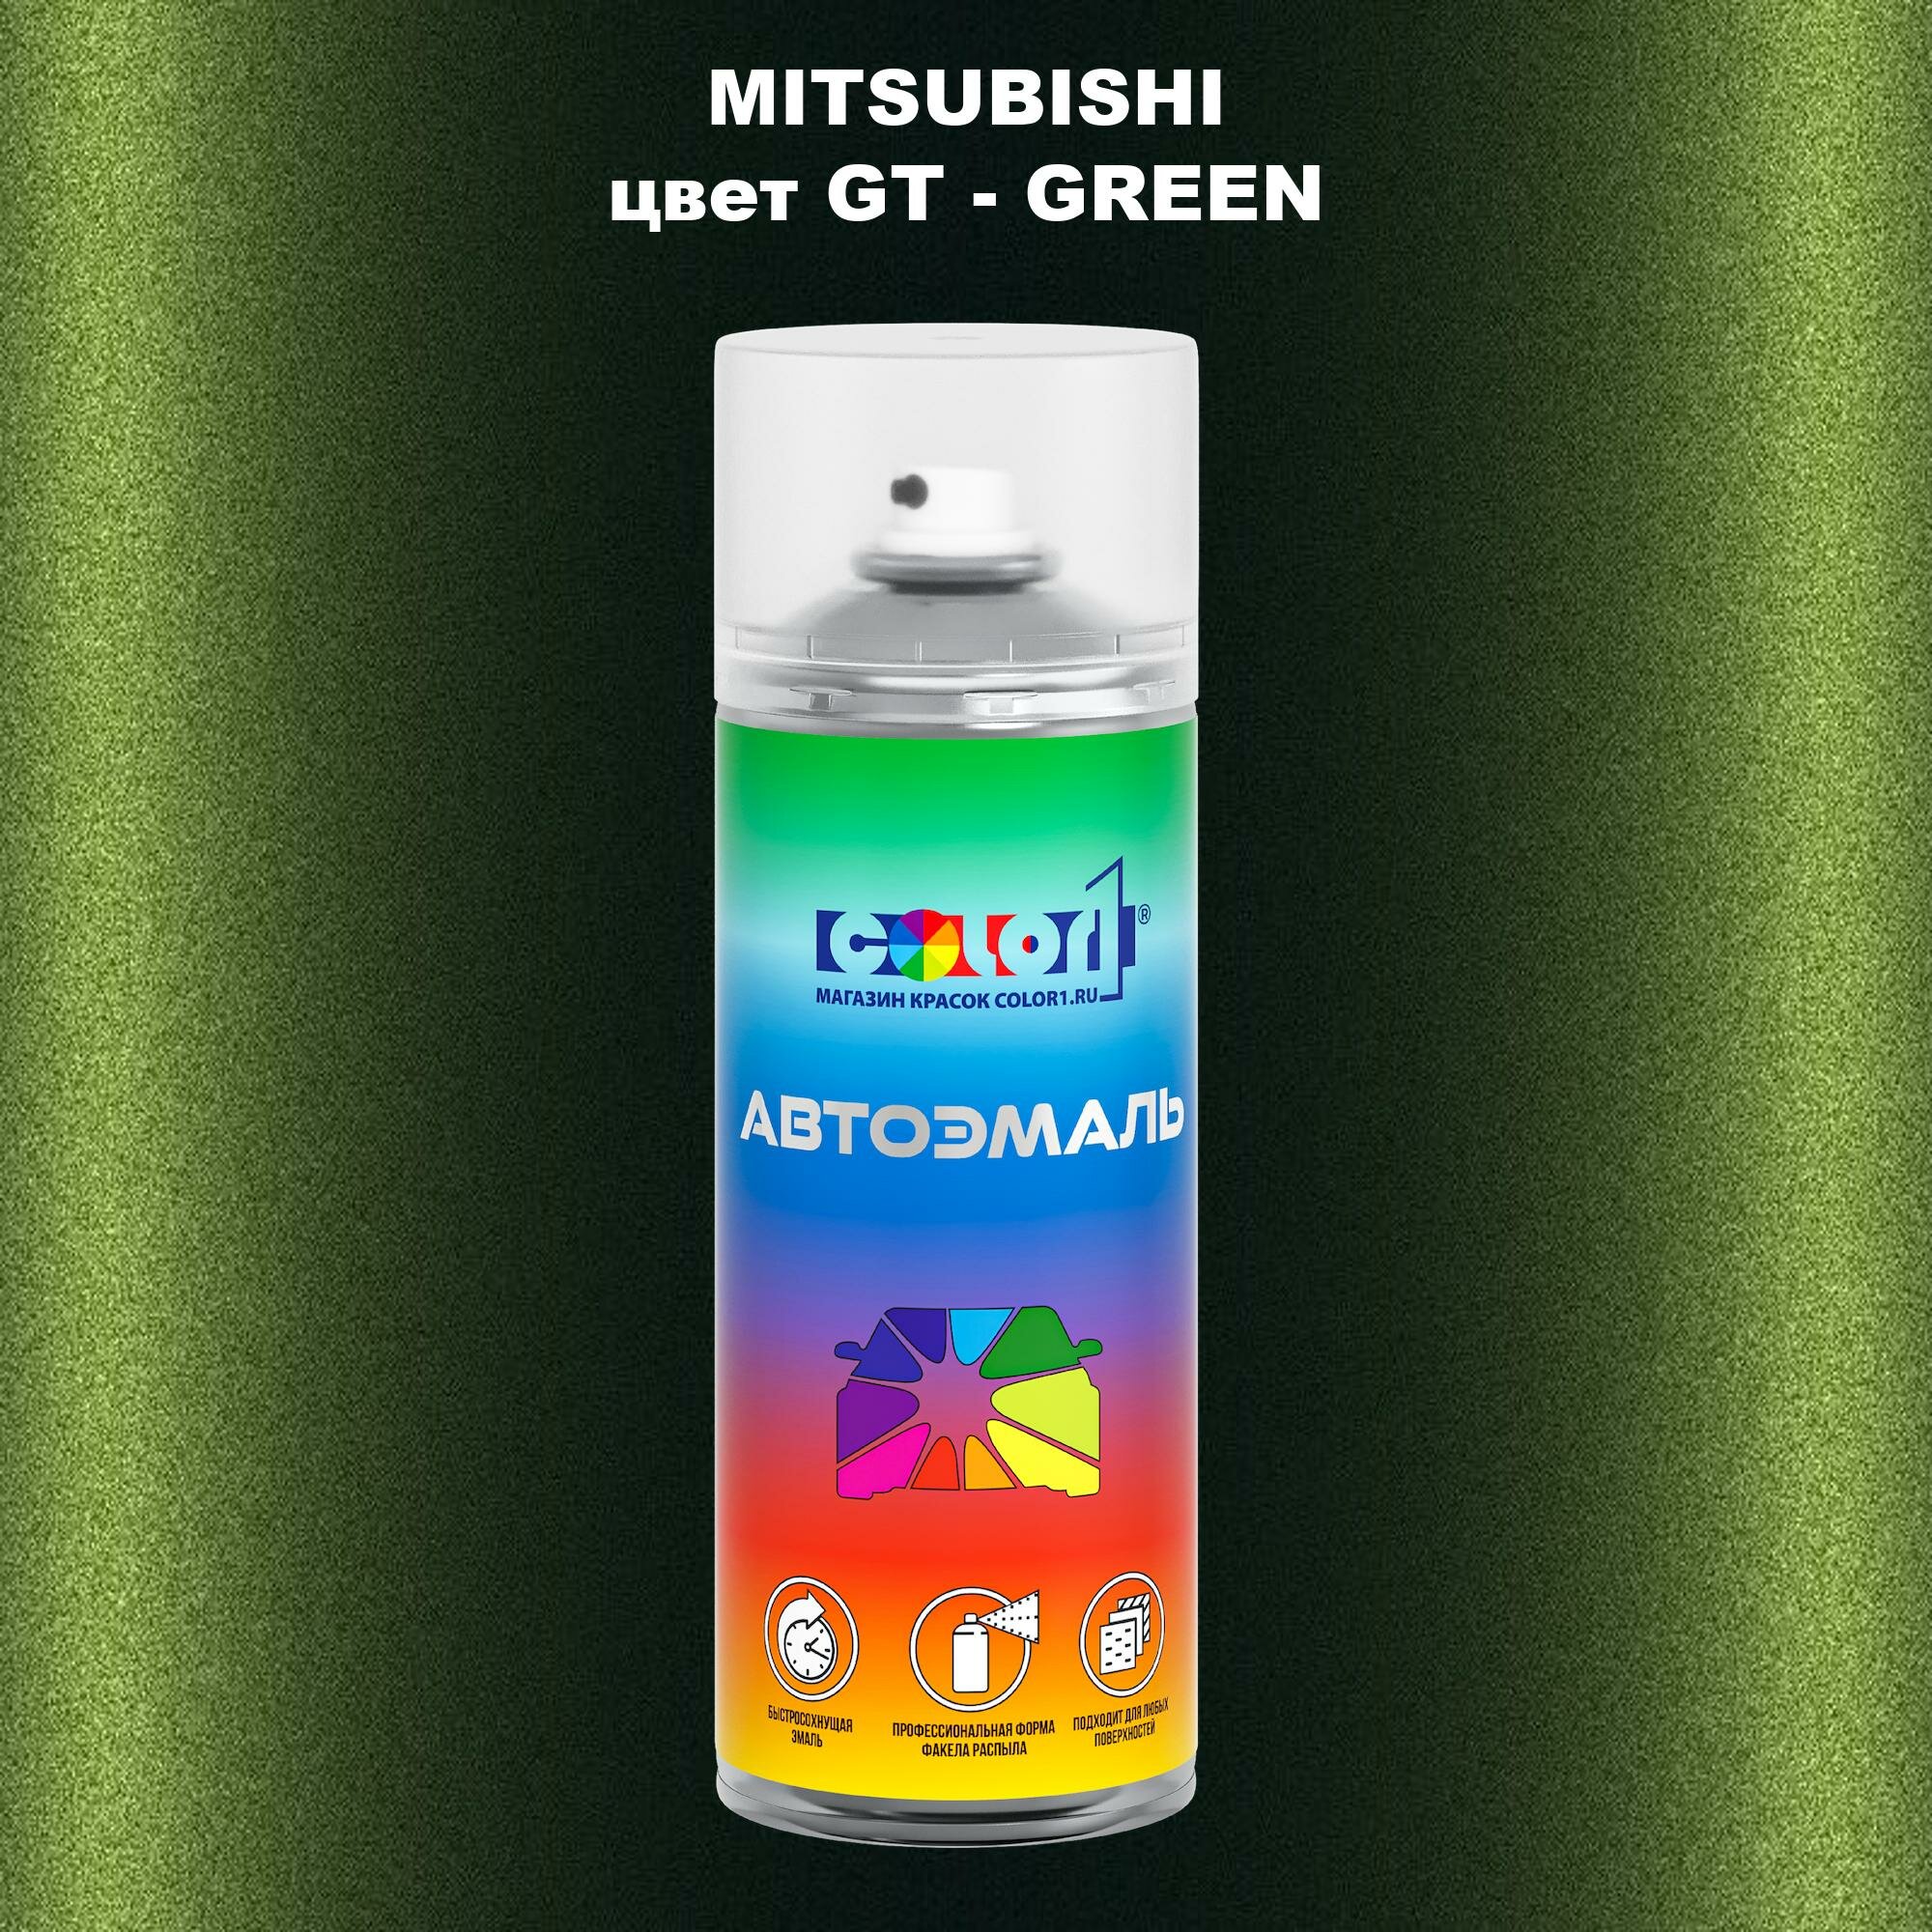 Аэрозольная краска COLOR1 для MITSUBISHI, цвет GT - GREEN